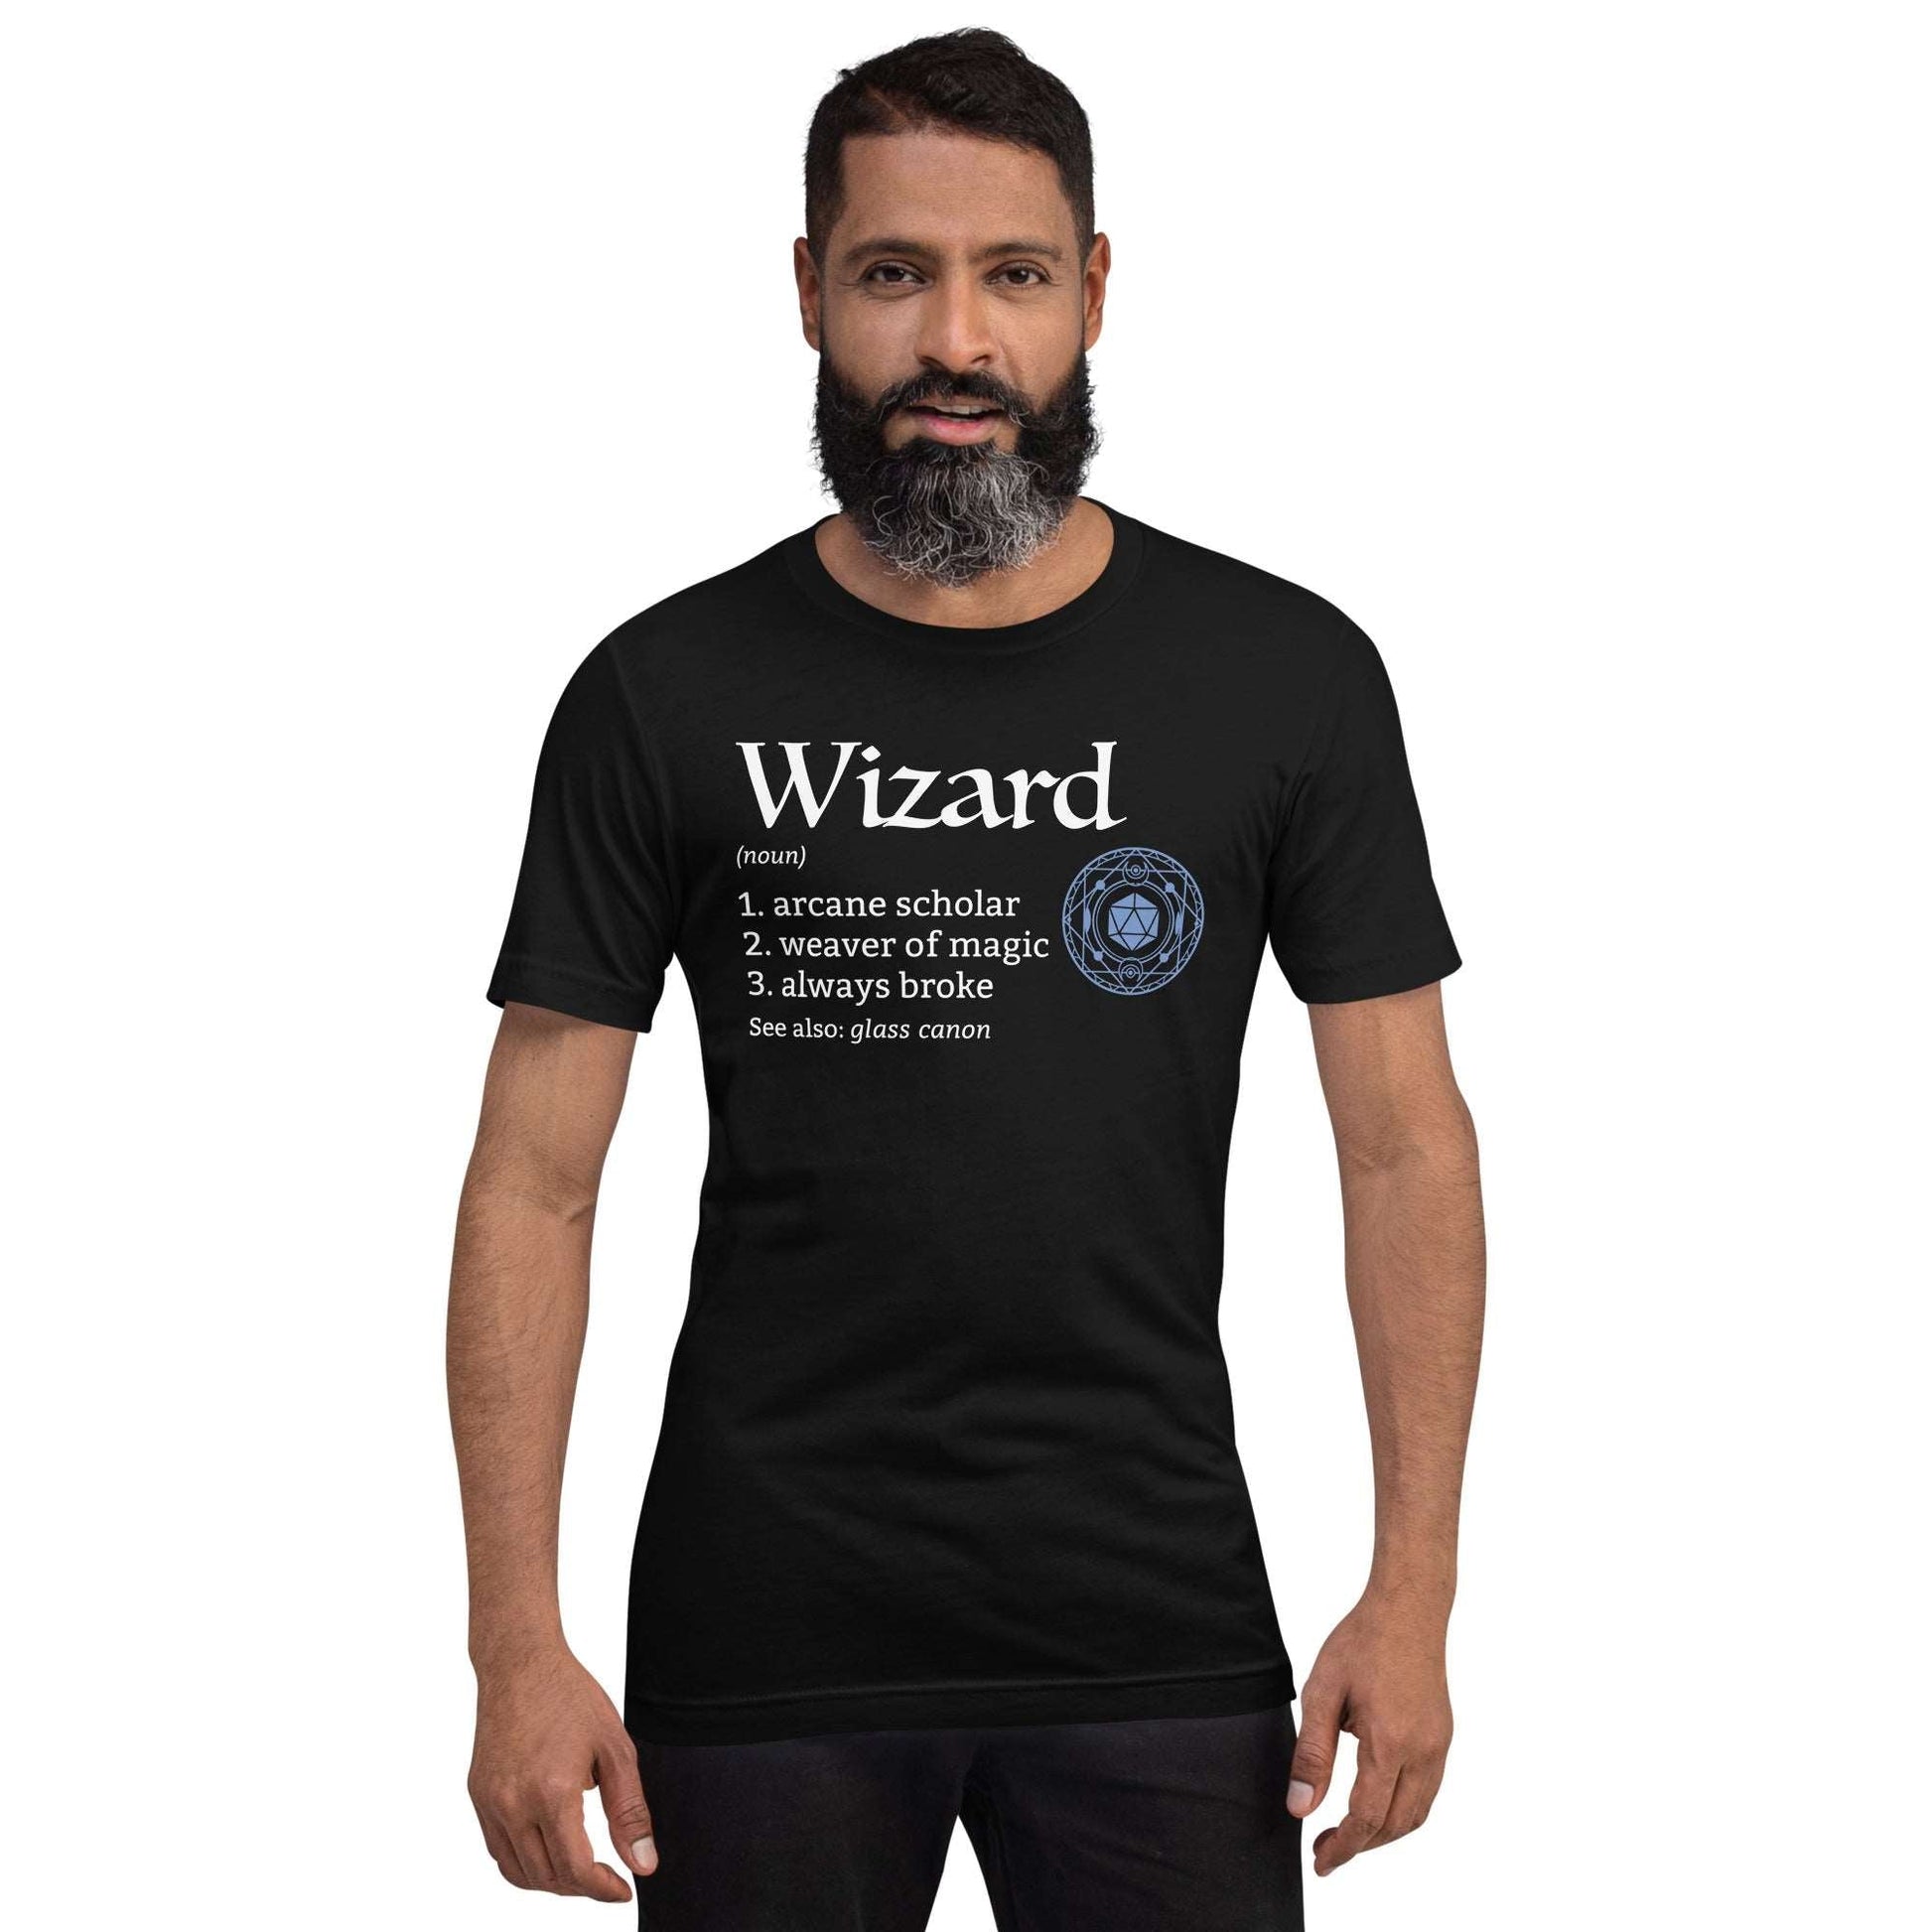 Wizard Class Definition T-Shirt – Funny DnD Definition Tee T-Shirt